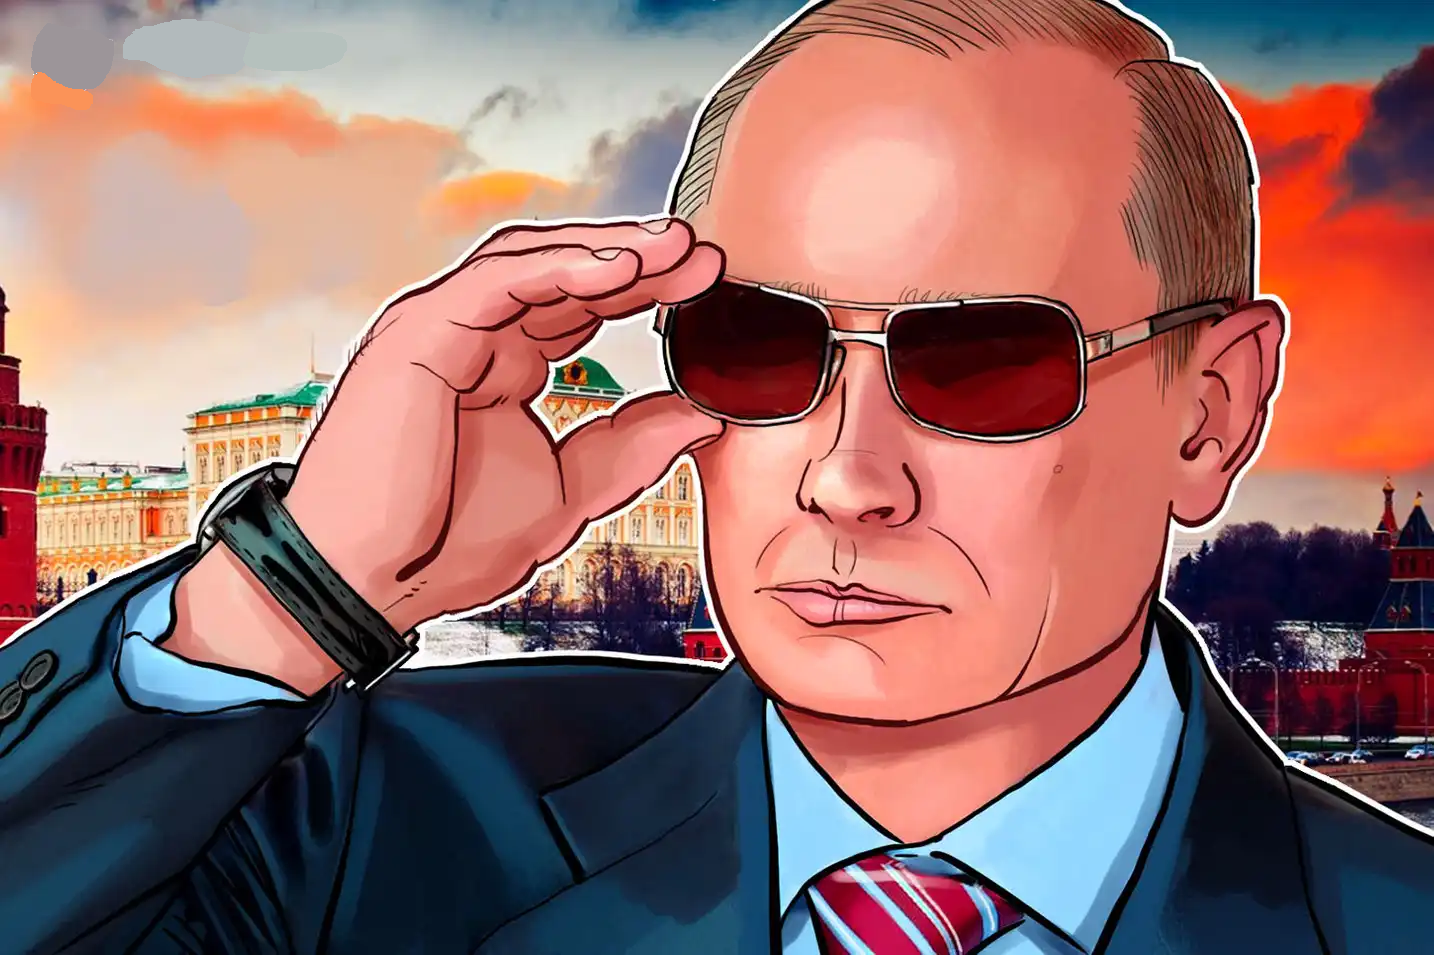 Nhung tac dong cua chien tranh Nga – Ukraine toi thi truong Bitcoin - anh 1